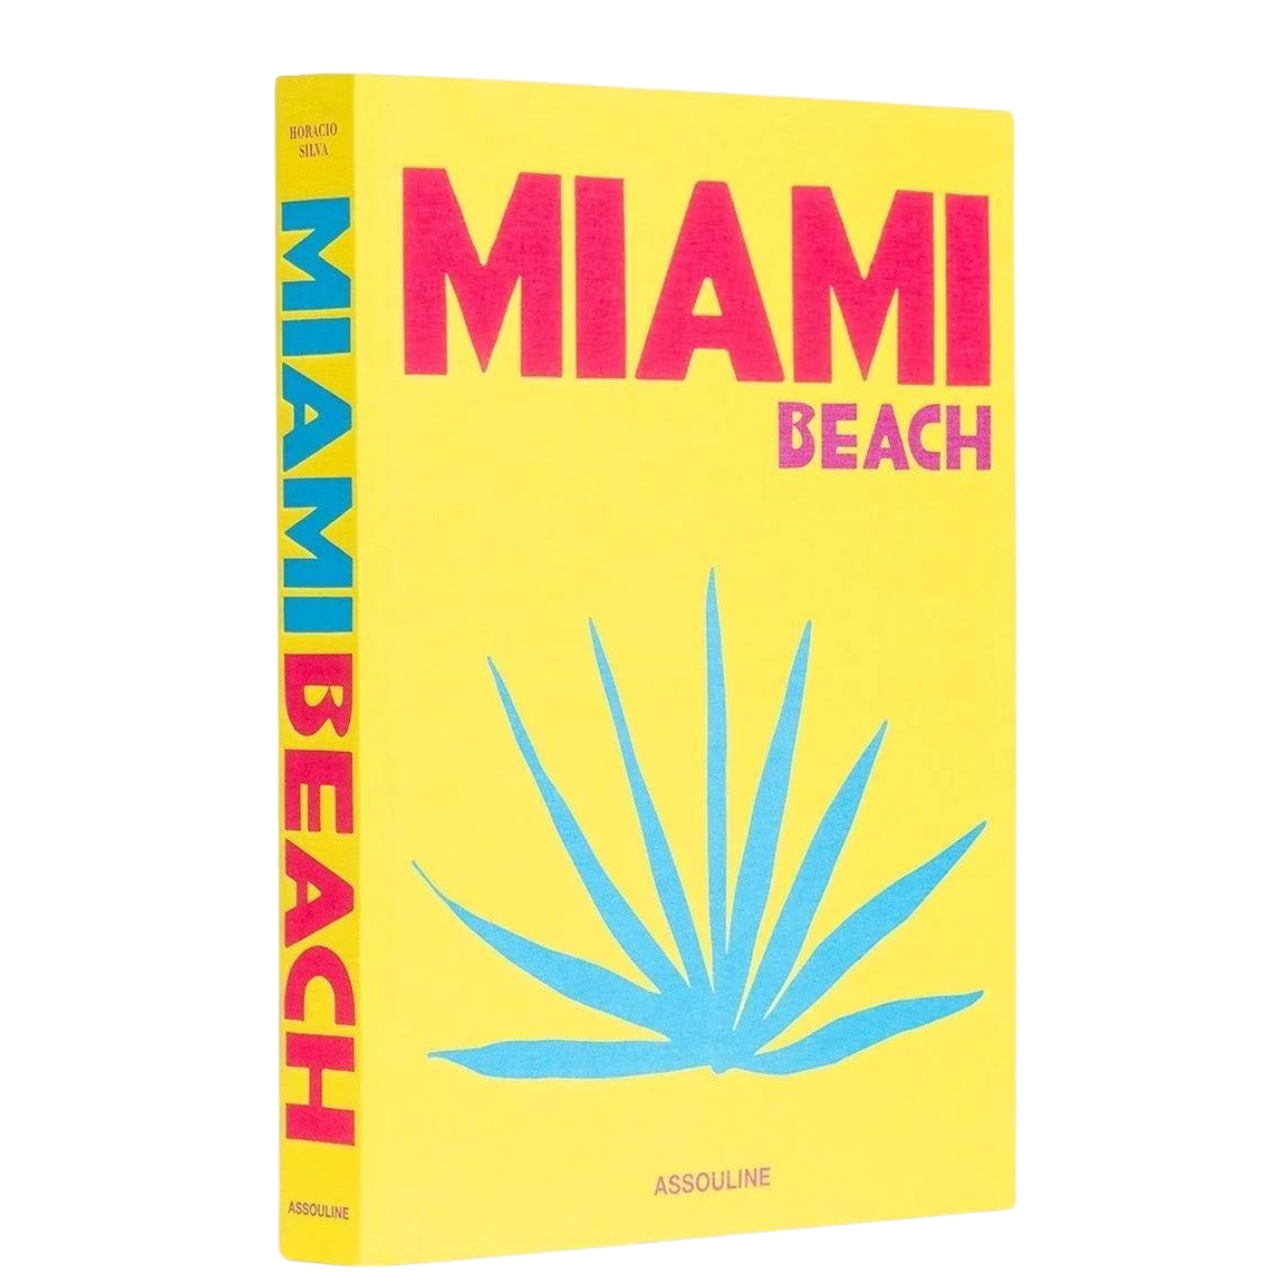 Assouline “Miami Beach” coffee table book